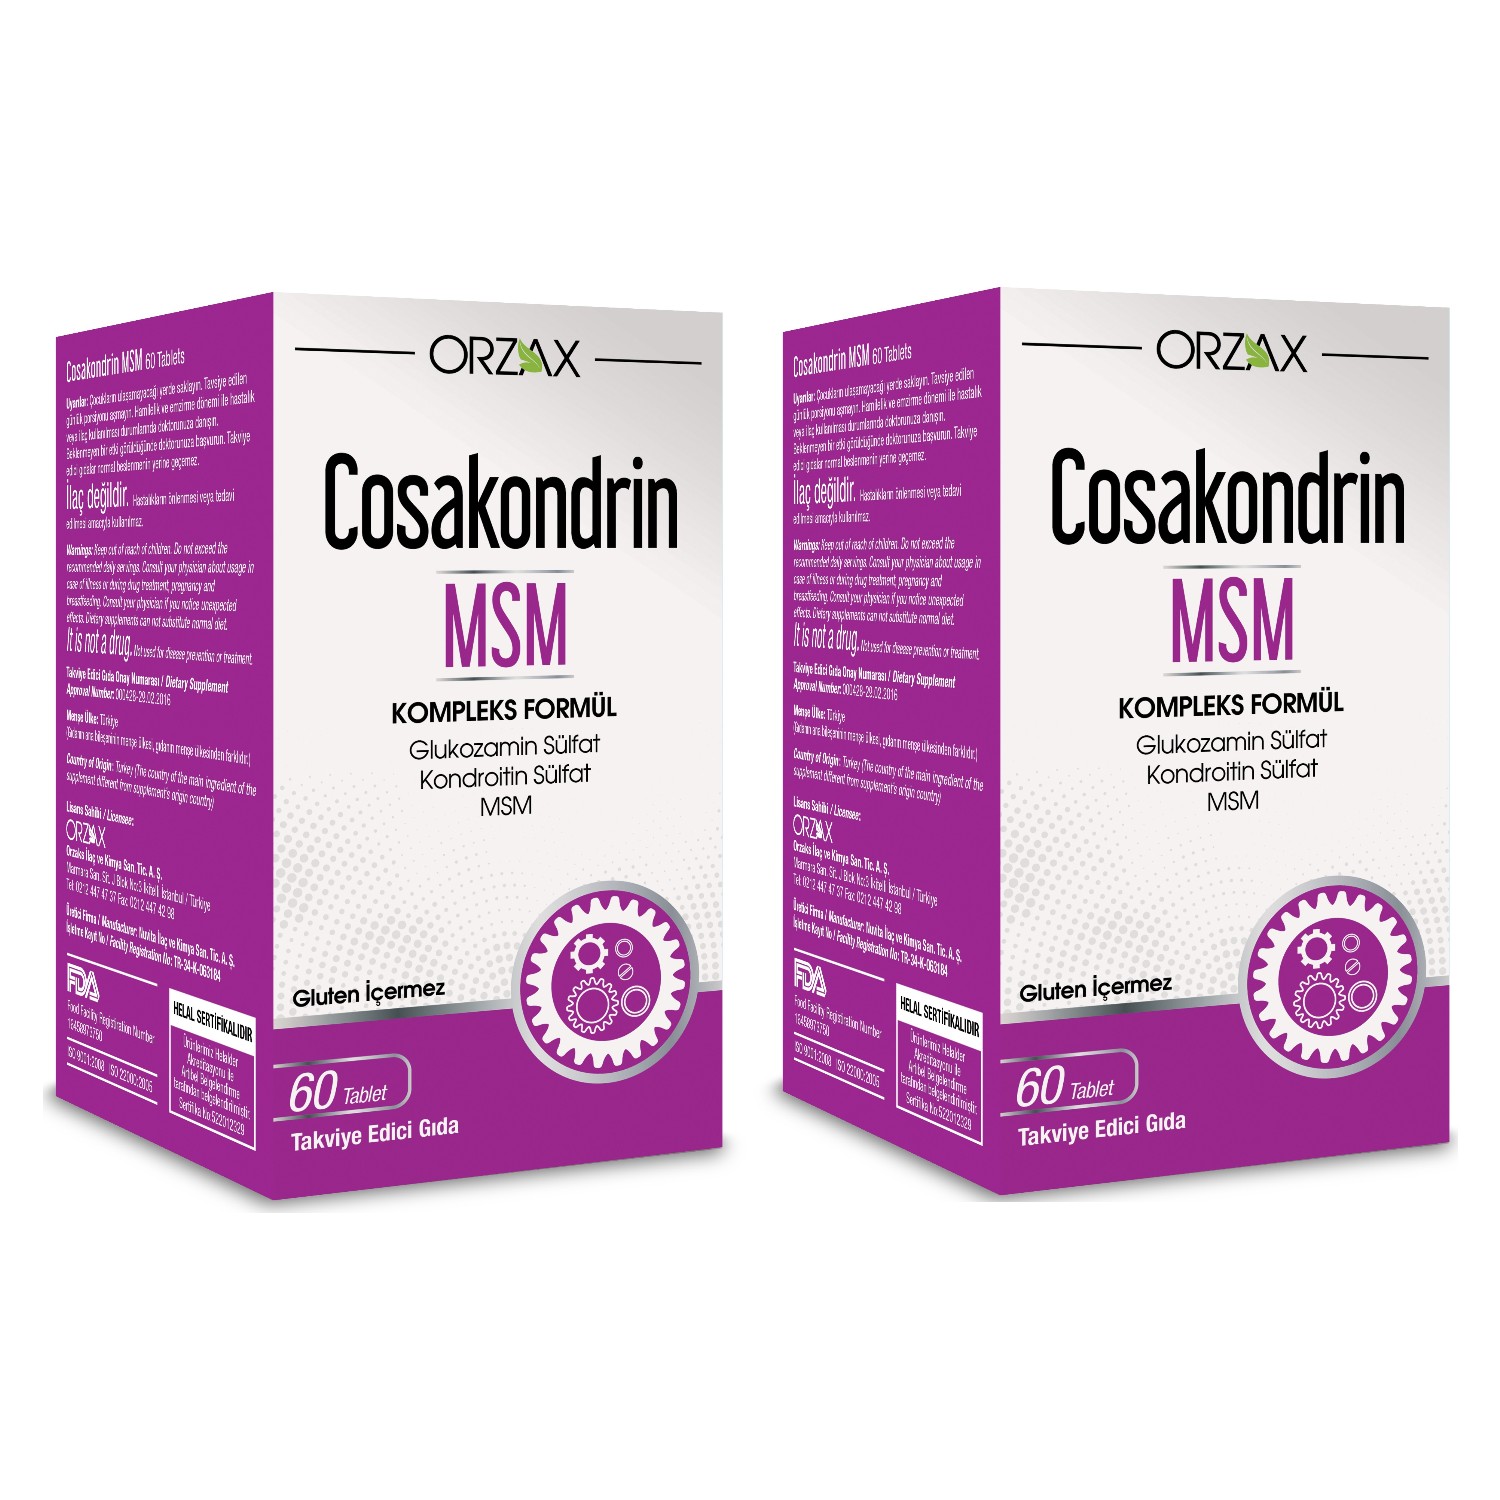 цена Пищевая добавка Orzax Cosakondrin Msm, 2 упаковки по 60 таблеток